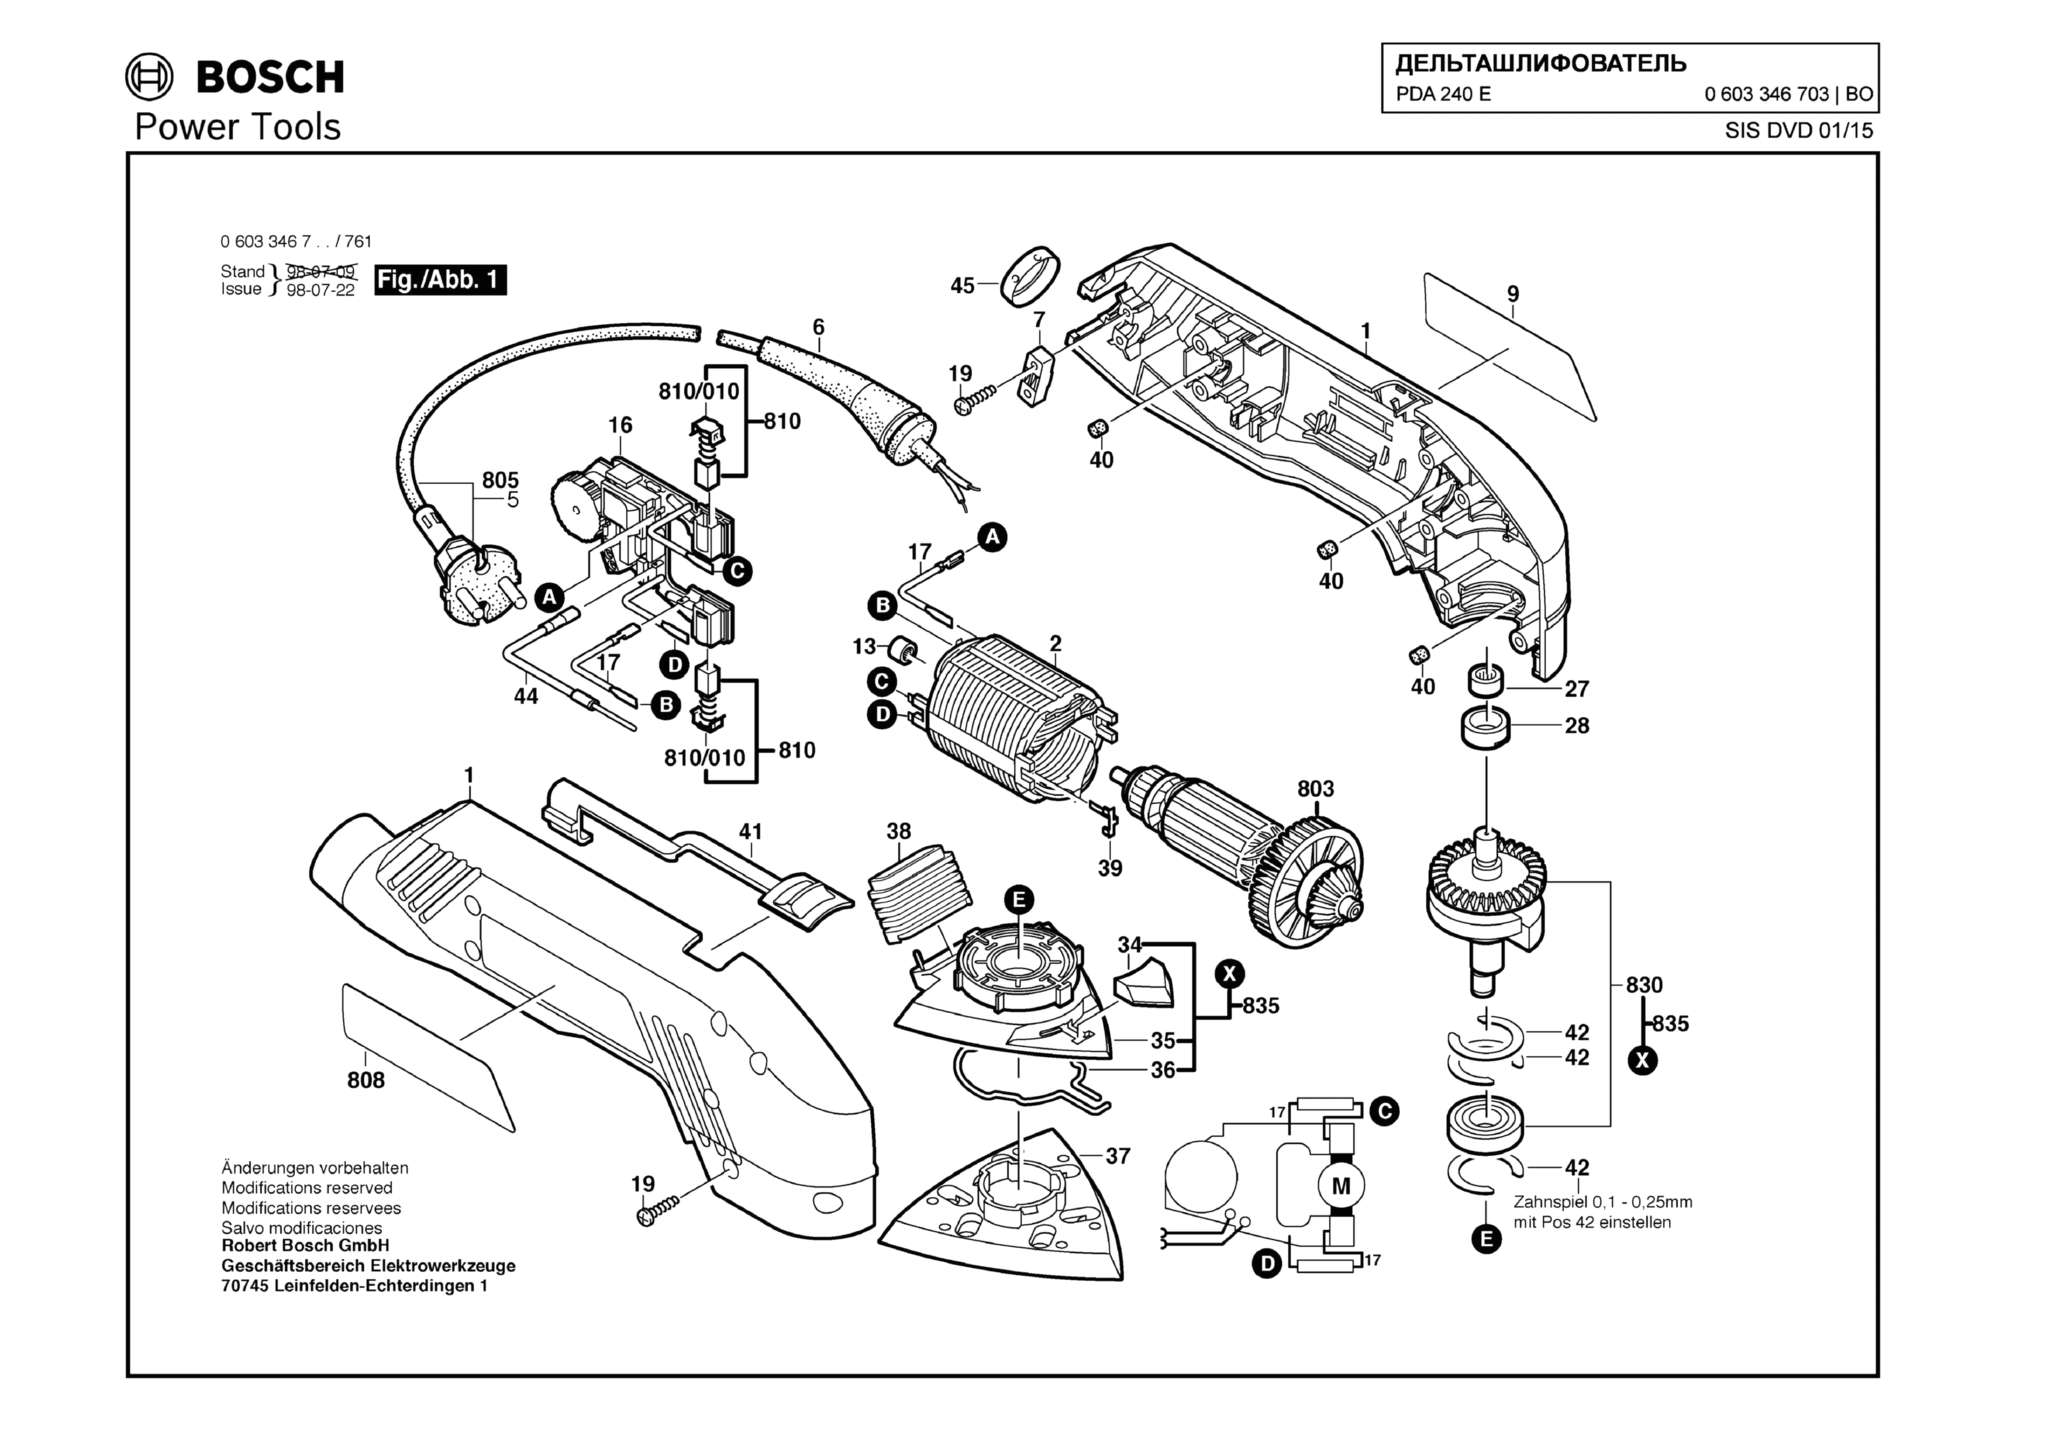 Запчасти, схема и деталировка Bosch PDA 240 E (ТИП 0603346703)